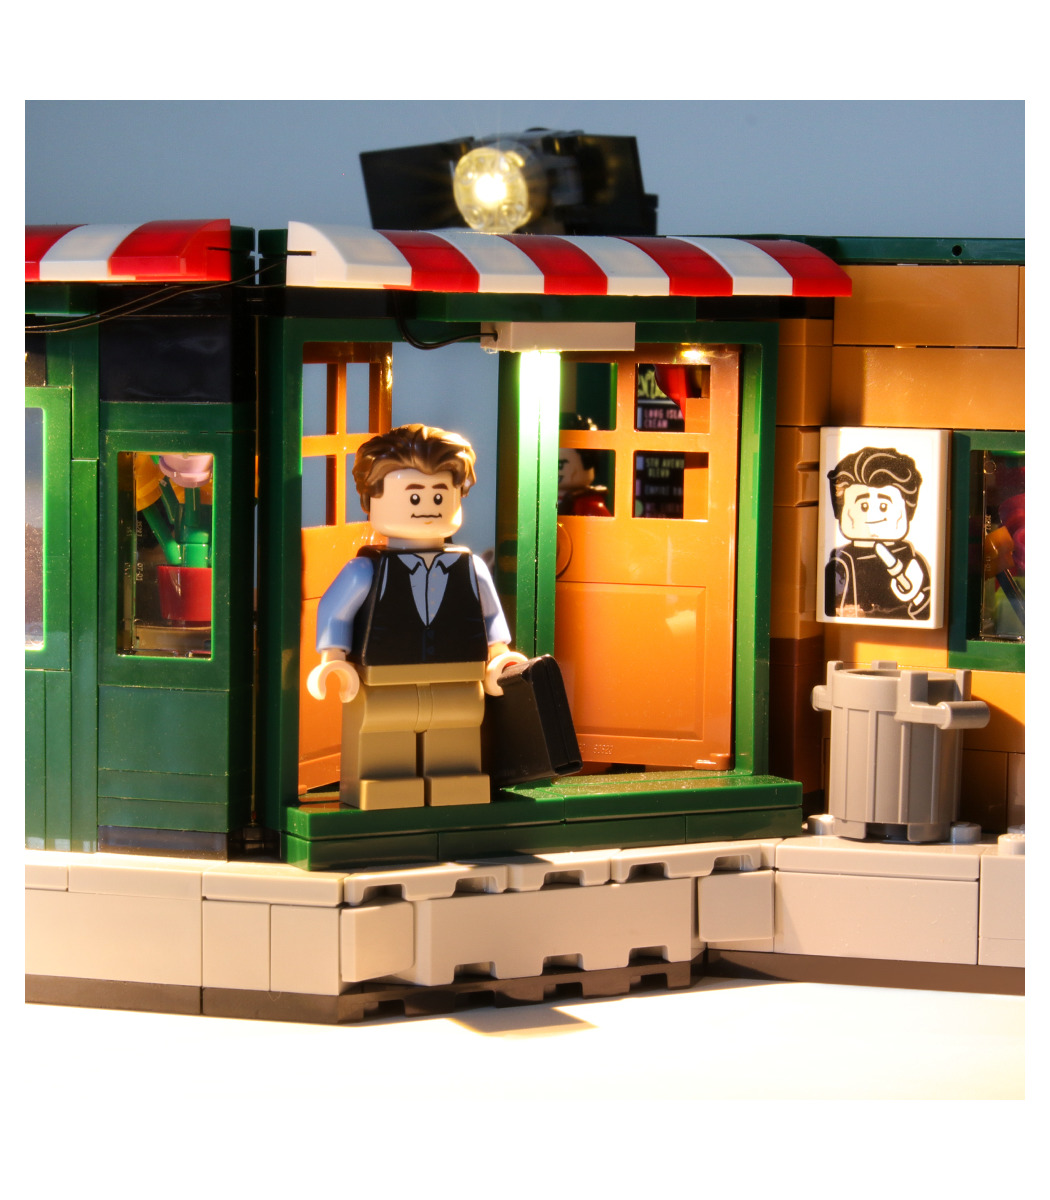  YEABRICKS LED Light for Lego-21319 Ideas Friends Central Perk  Building Blocks Model (Lego Set NOT Included) : Toys & Games